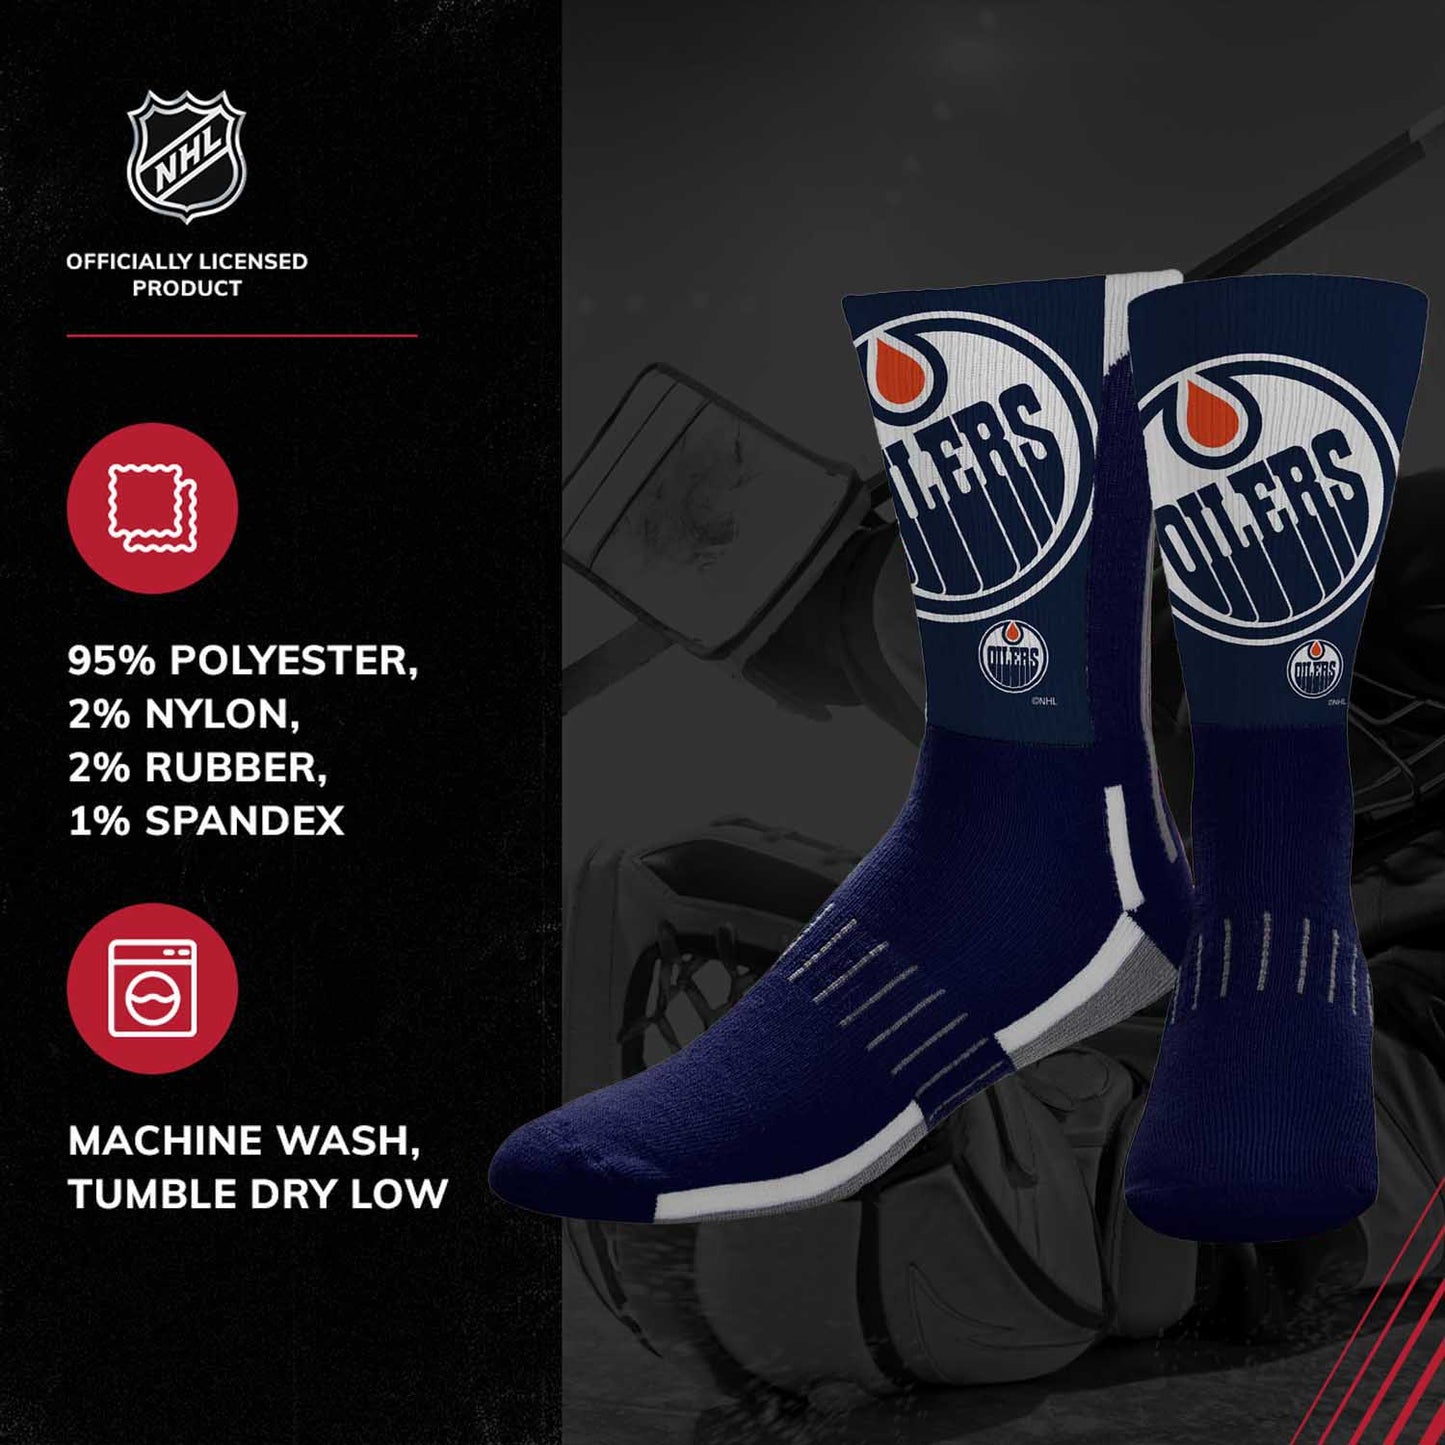 Edmonton Oilers Youth NHL Zoom Curve Team Crew Socks - Navy